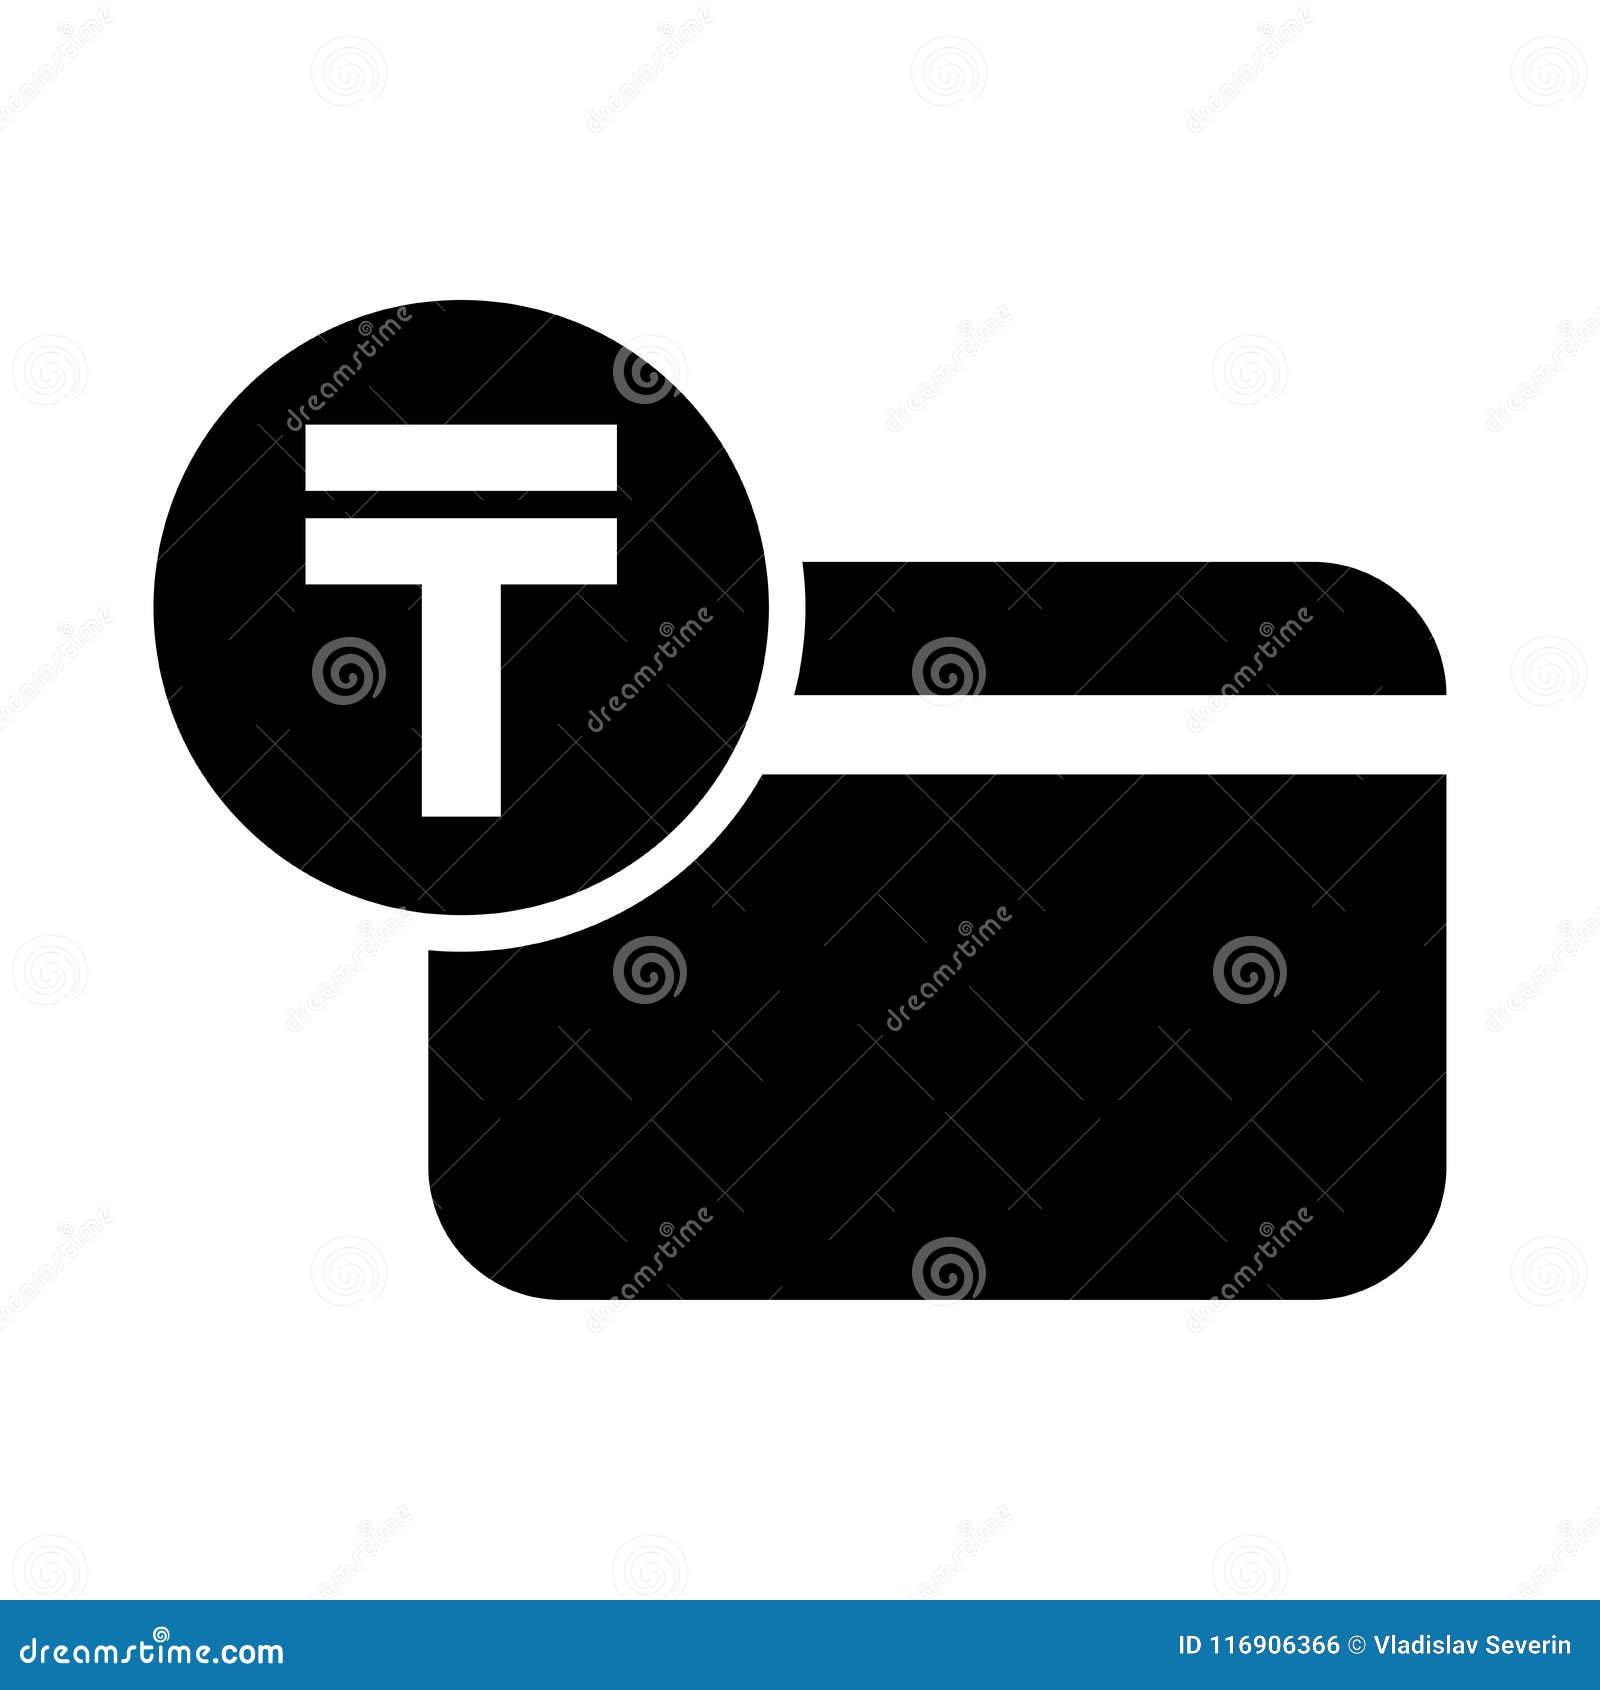 Kazakhstani Tenge Credit Card Icon Stock Illustration - Illustration of